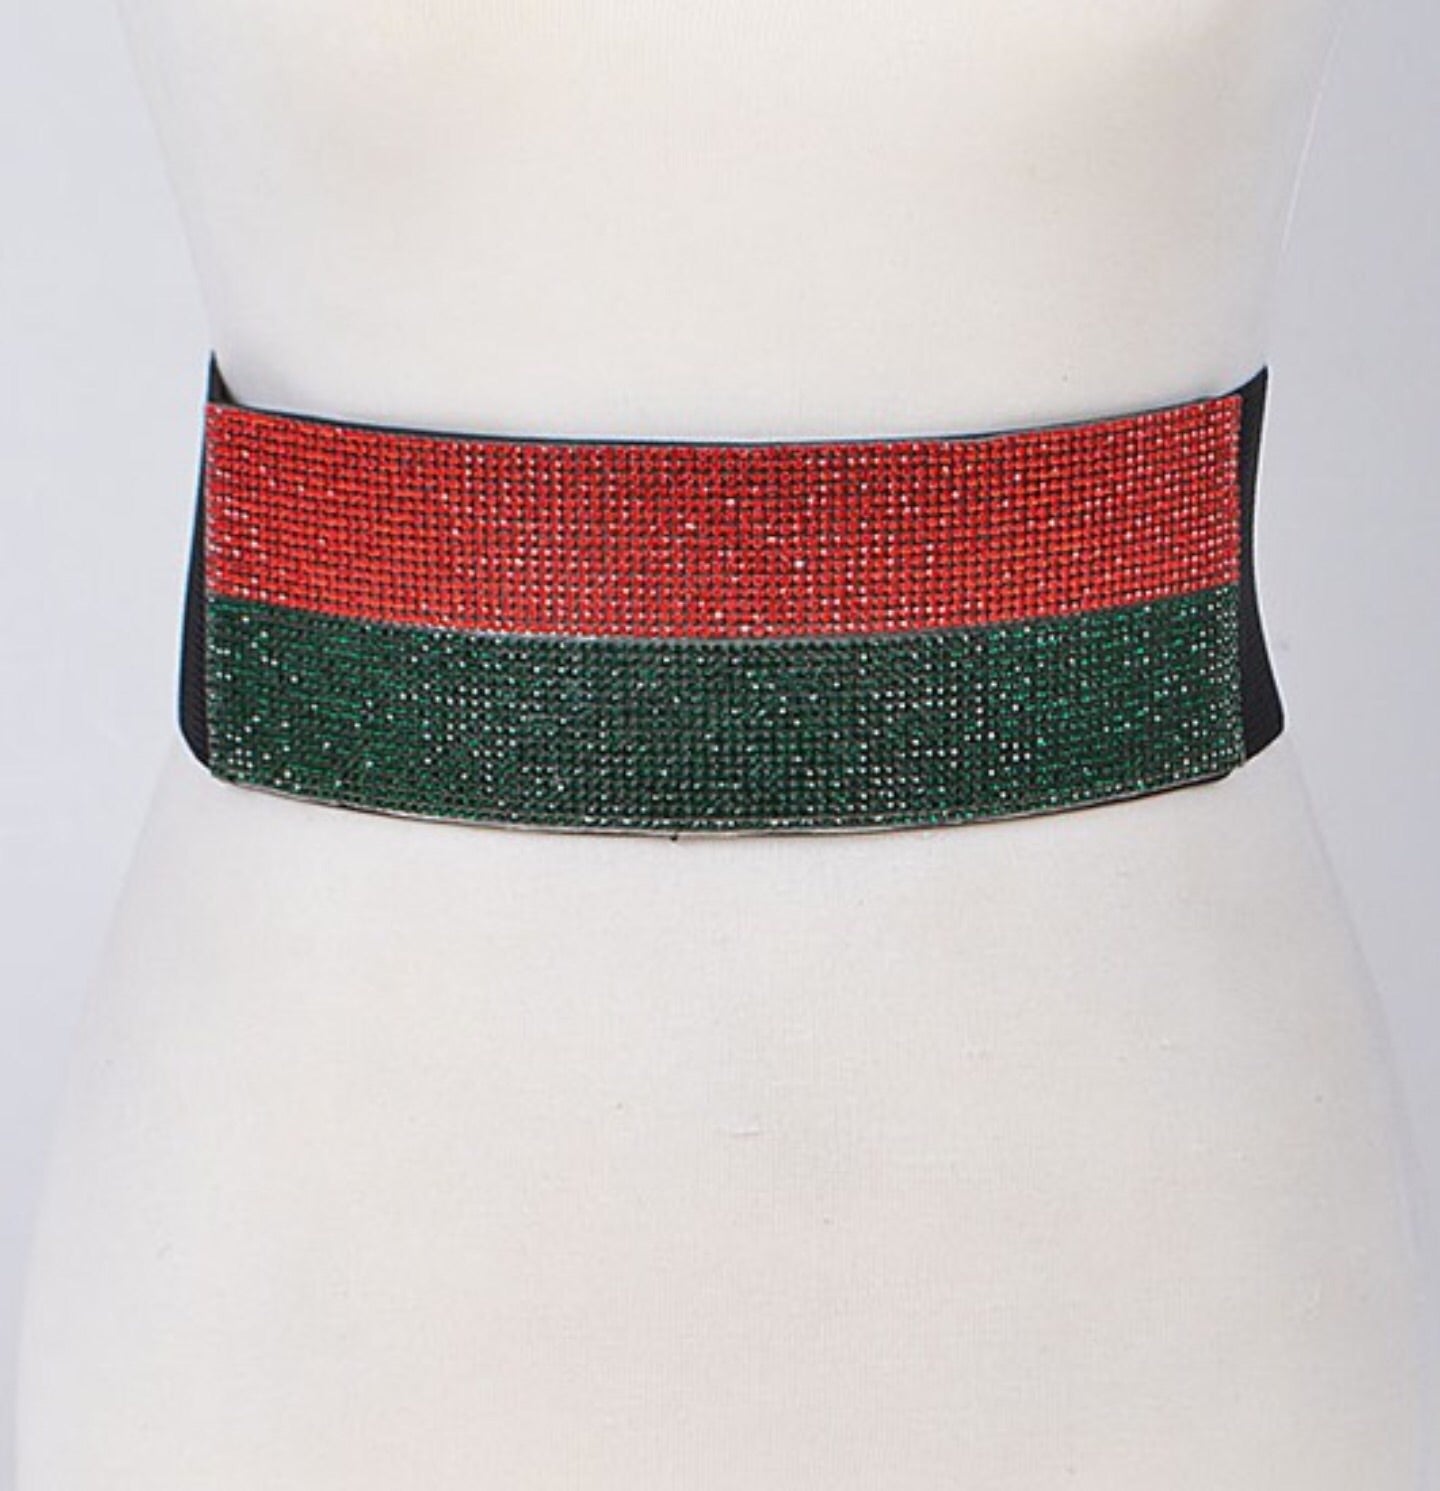 Gucci Inspired Belt - Regular Size